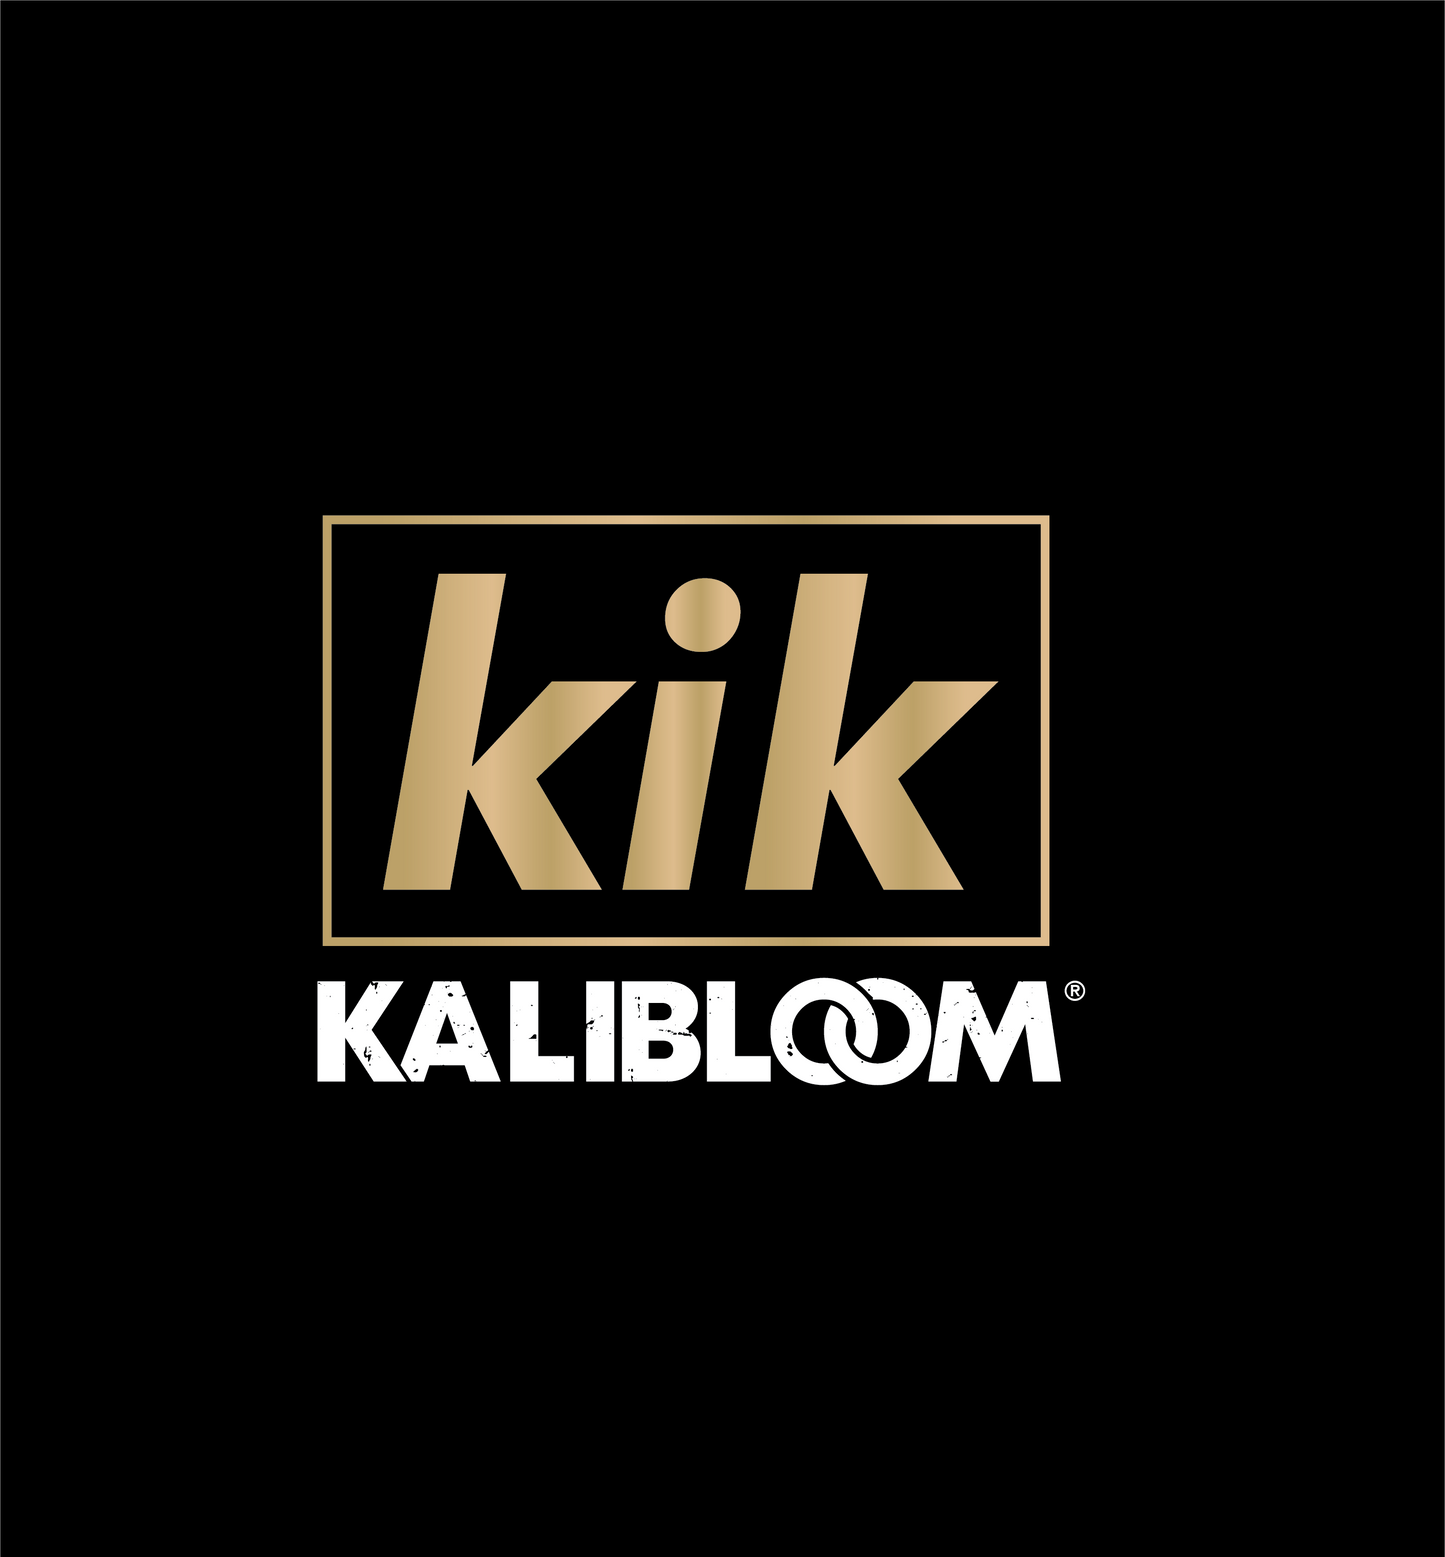 Kalibloom Kik Mimosa Delta 8 Disposable (1g) Best Sales Price - Vape Pens